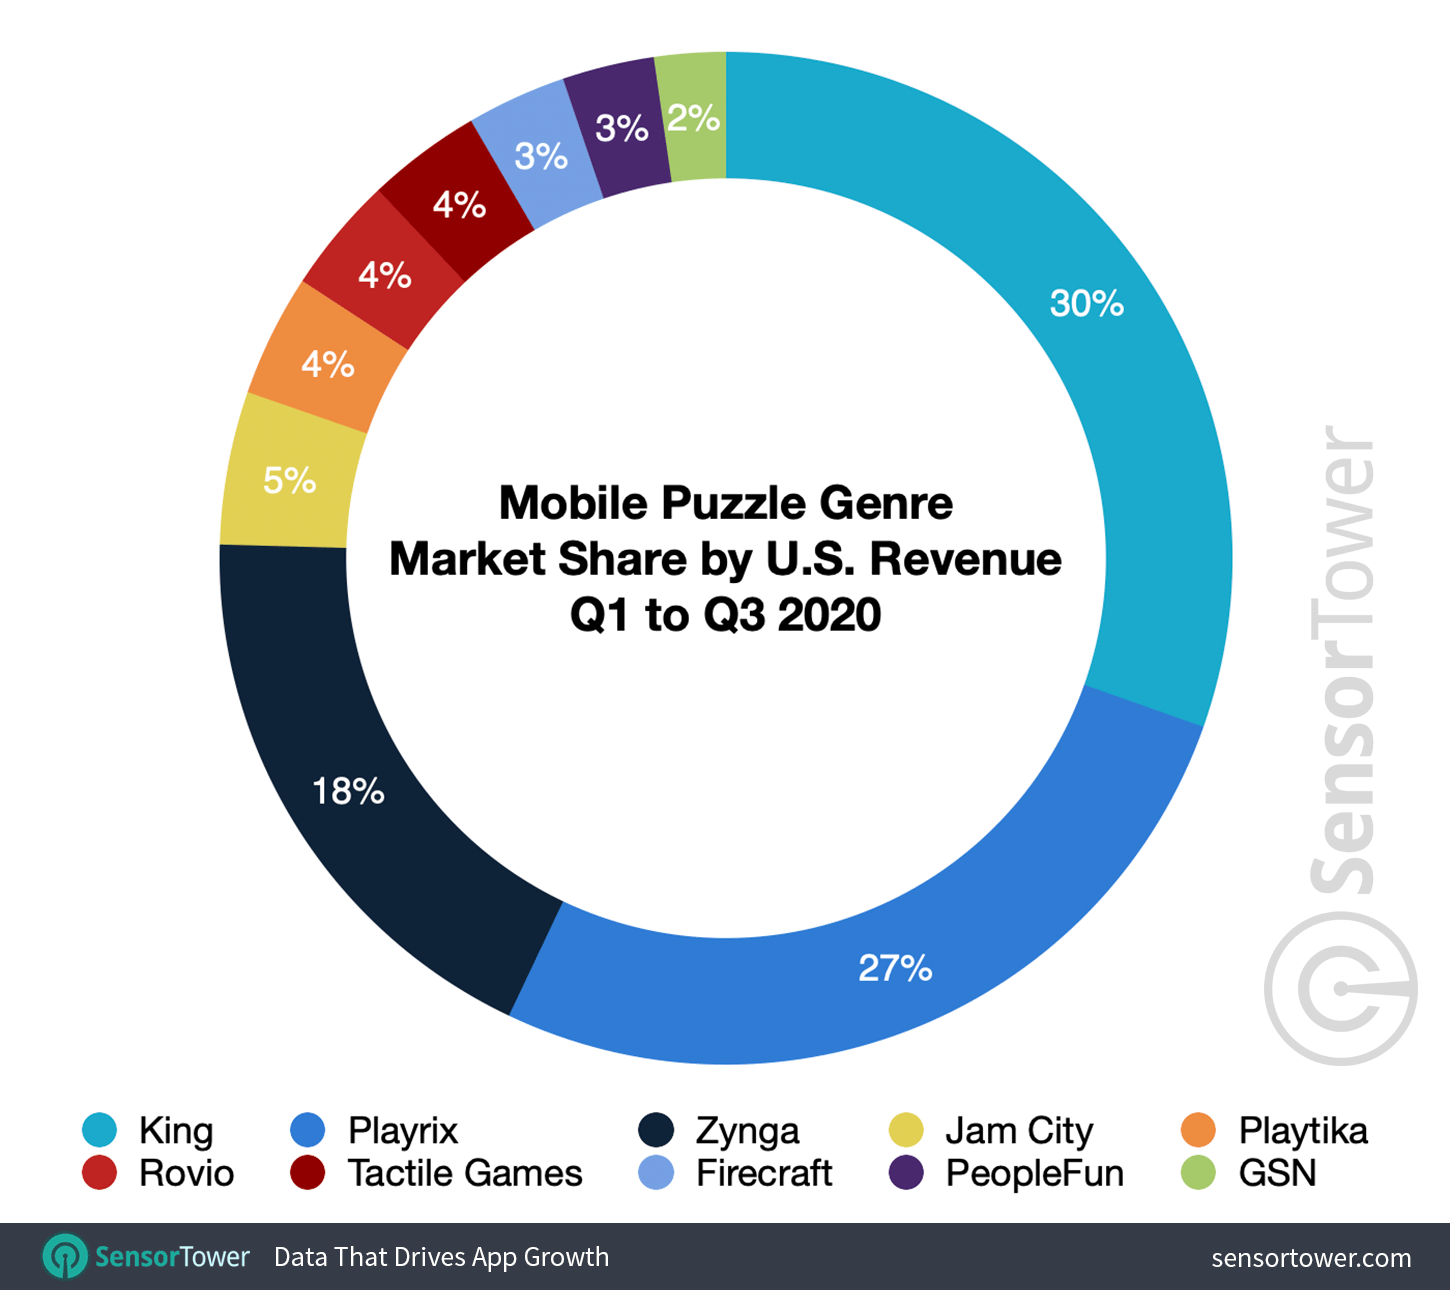 Mobile Puzzle Genre Market Share by U.S. Revenue for Q1 to Q3 2020